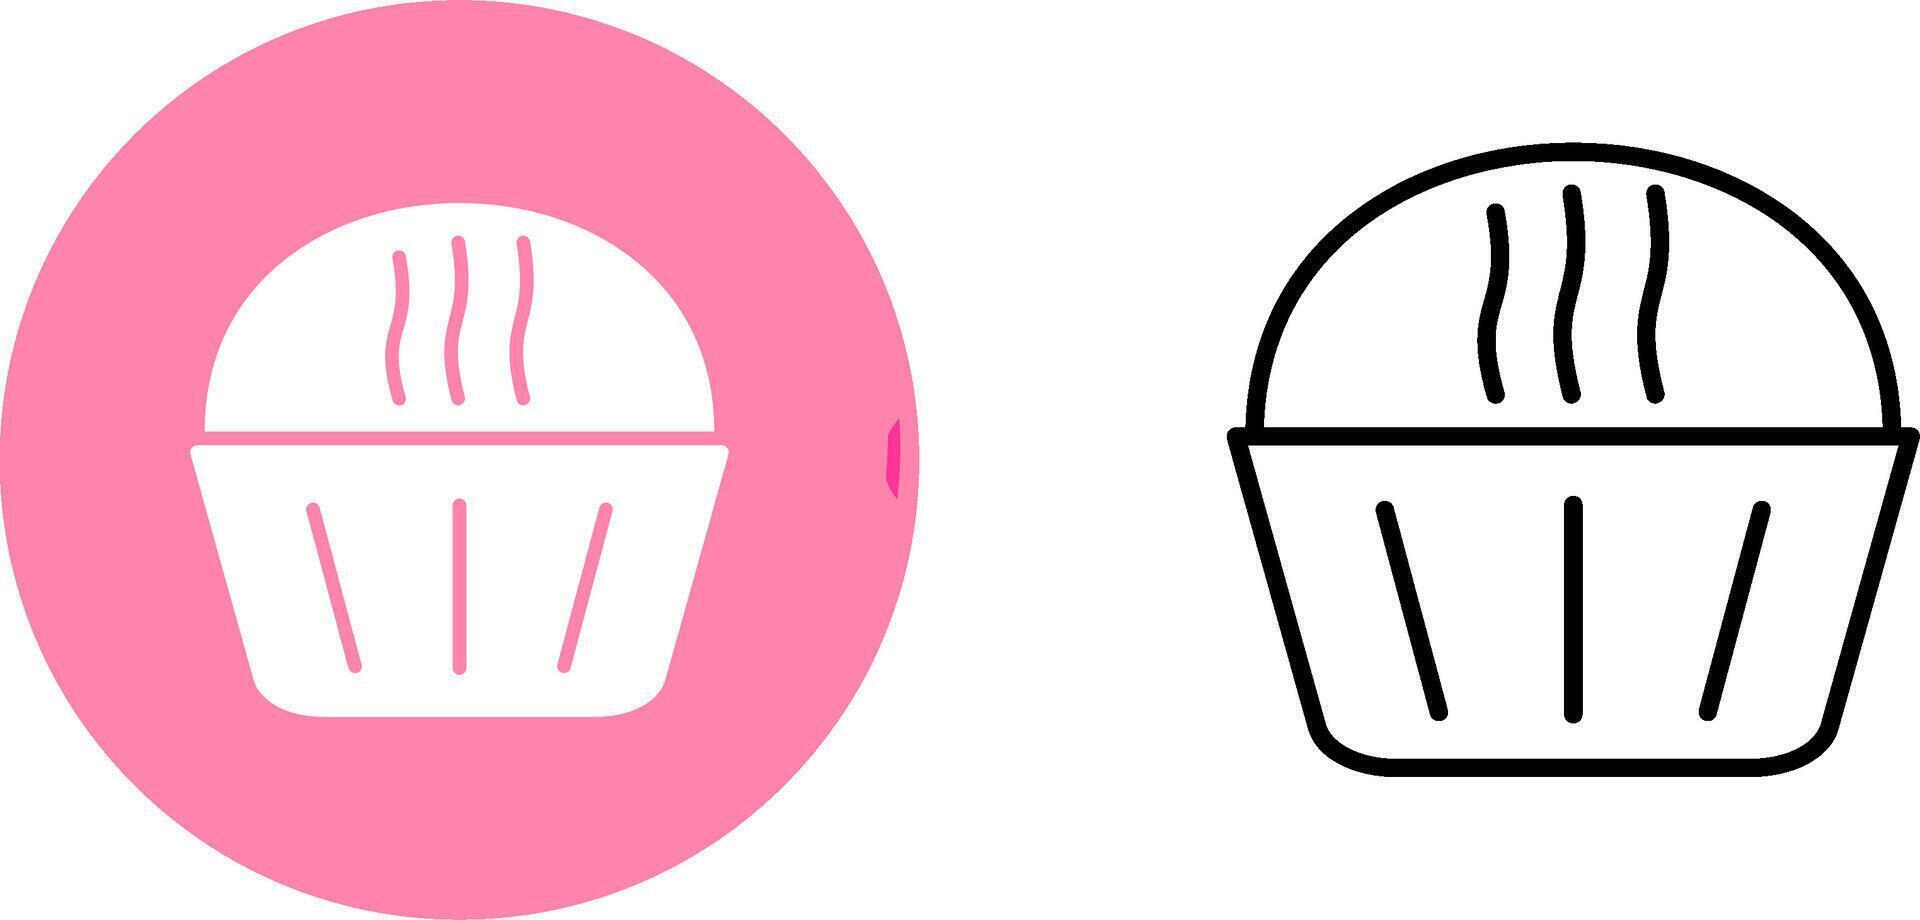 Creme-Muffin-Vektorsymbol vektor